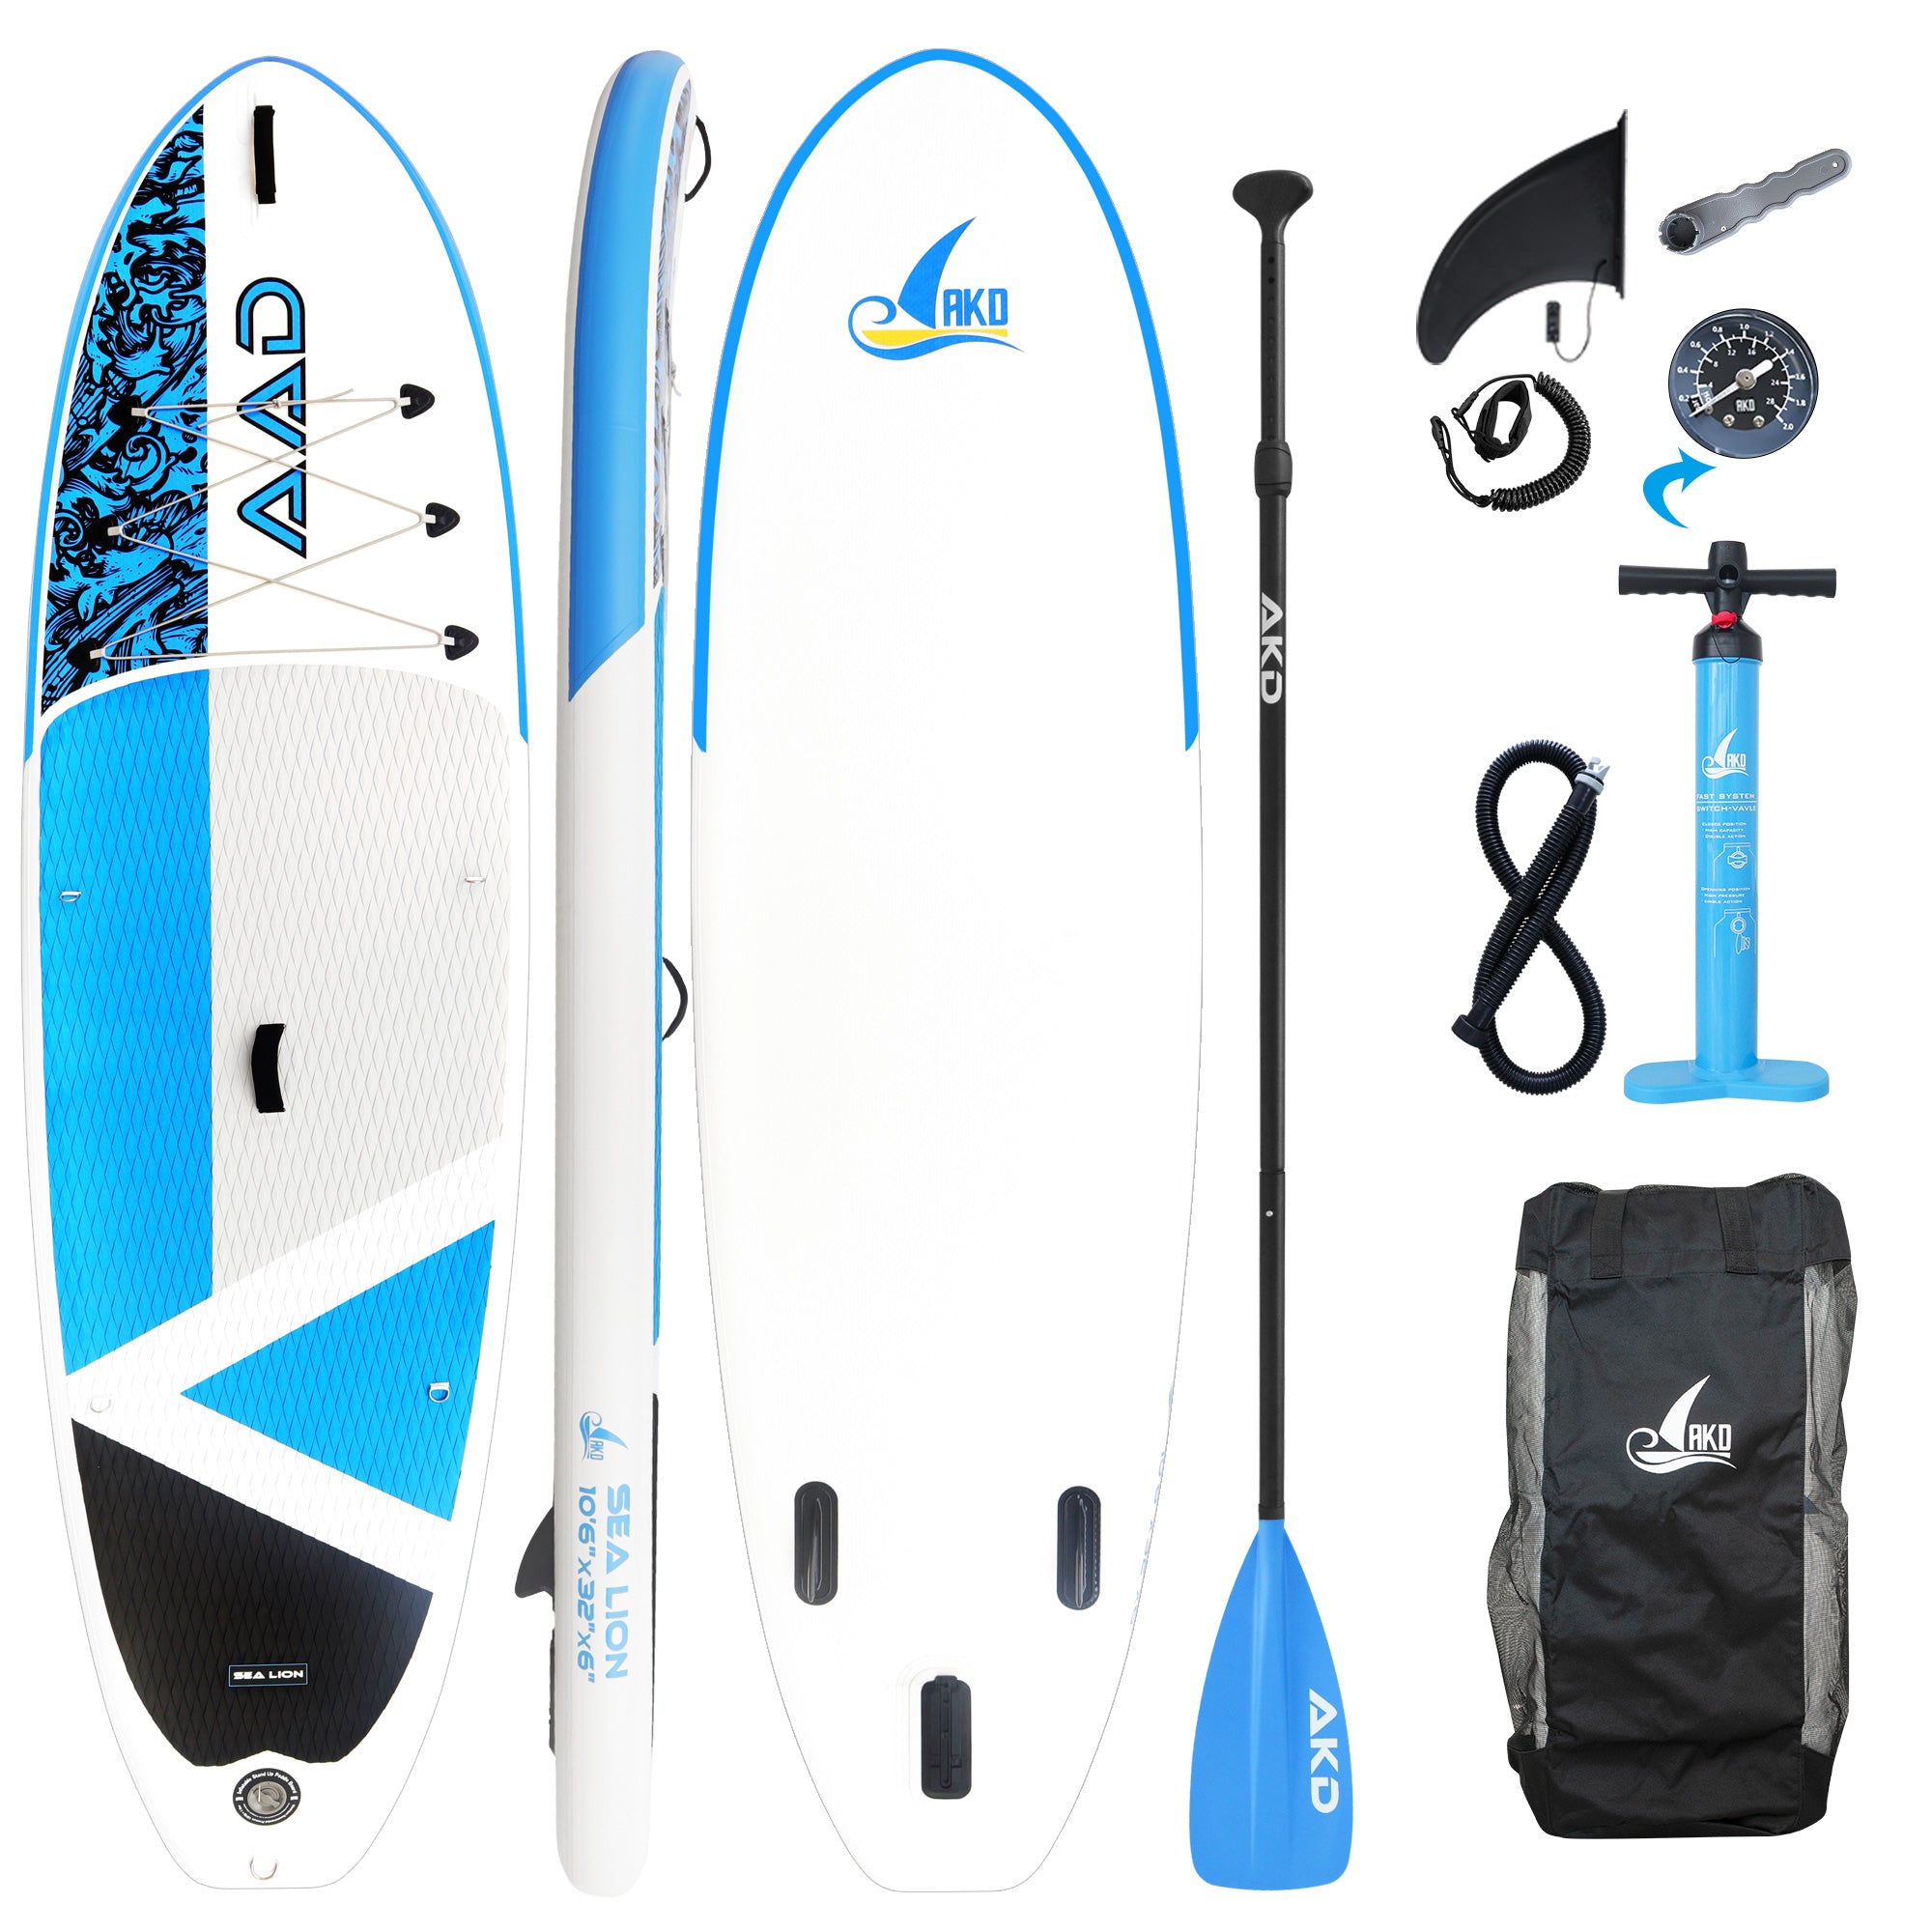 AKD SeaLion Stand Up Paddle Board 10'6" XL 320x86x15cm SUP Board 160kg/337L (Blue)